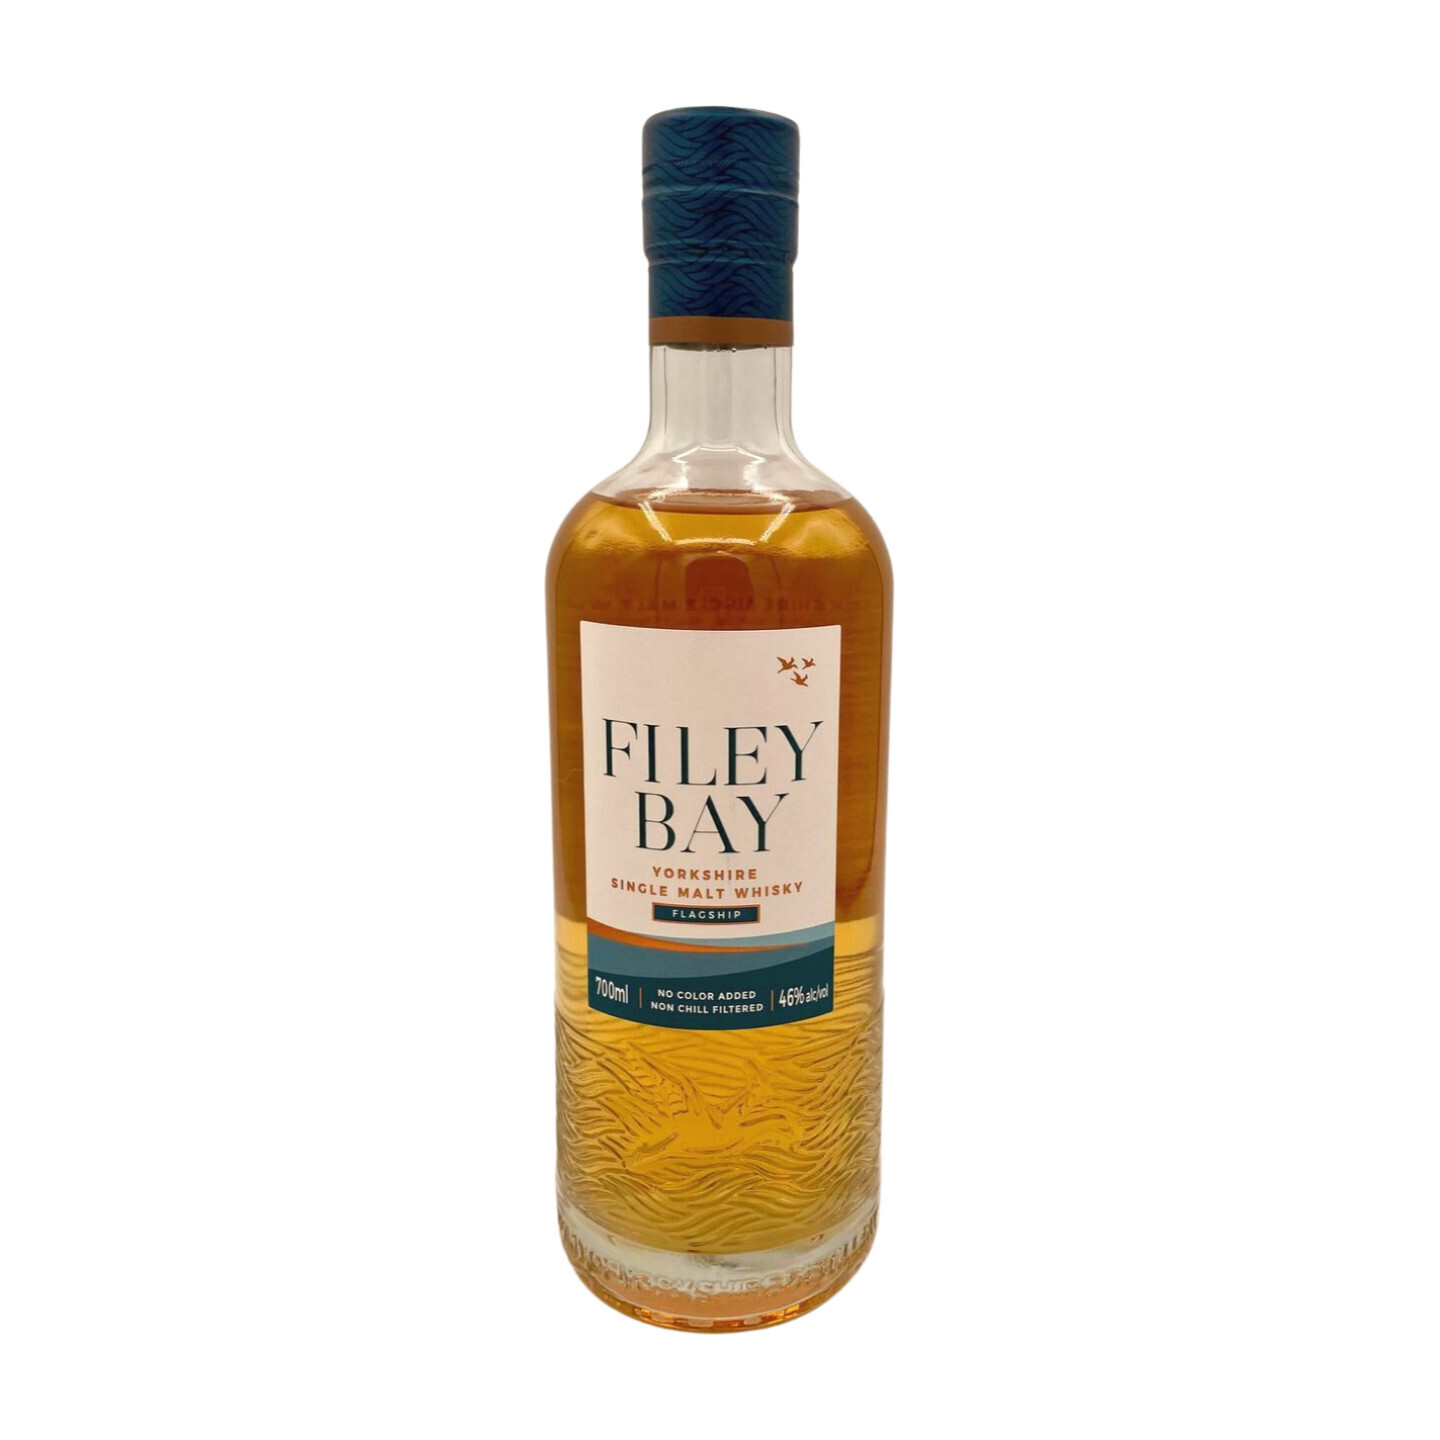 Filey Bay Yorkshire 'Flagship' Single Malt Yorkshire Whisky